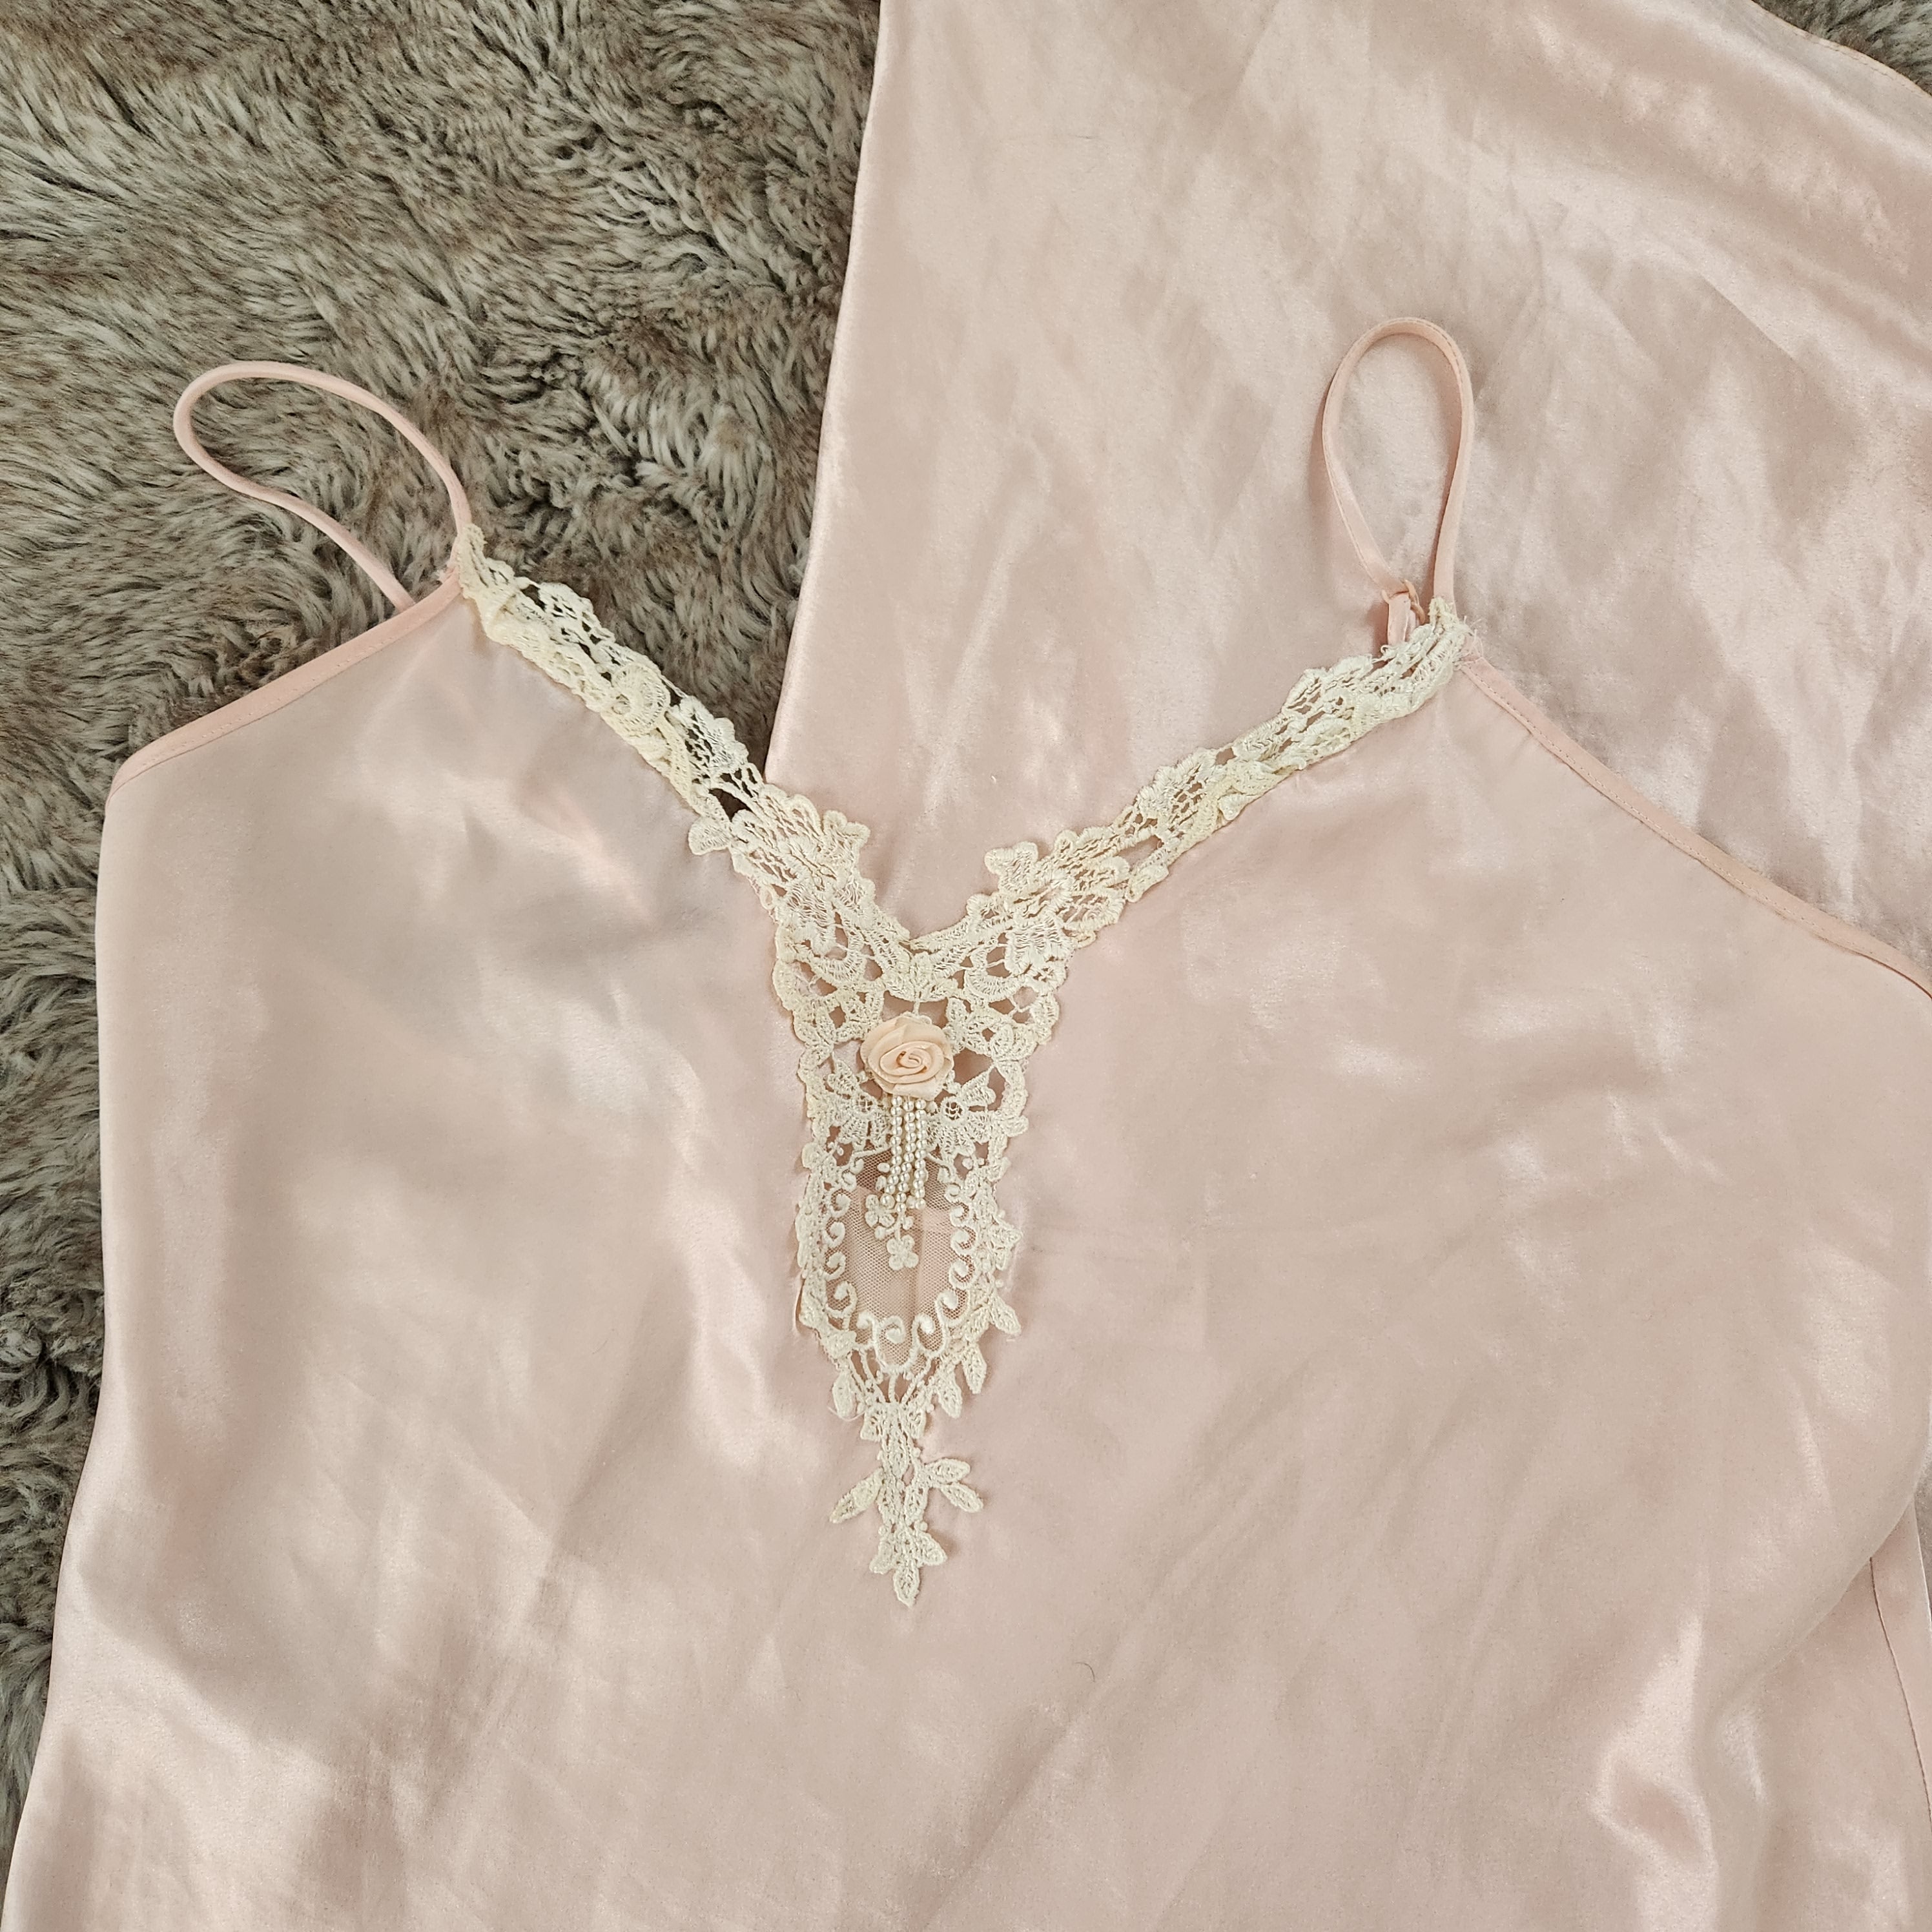 Tiffany's Closet Satin Nightgown Full Length Slip Size Large